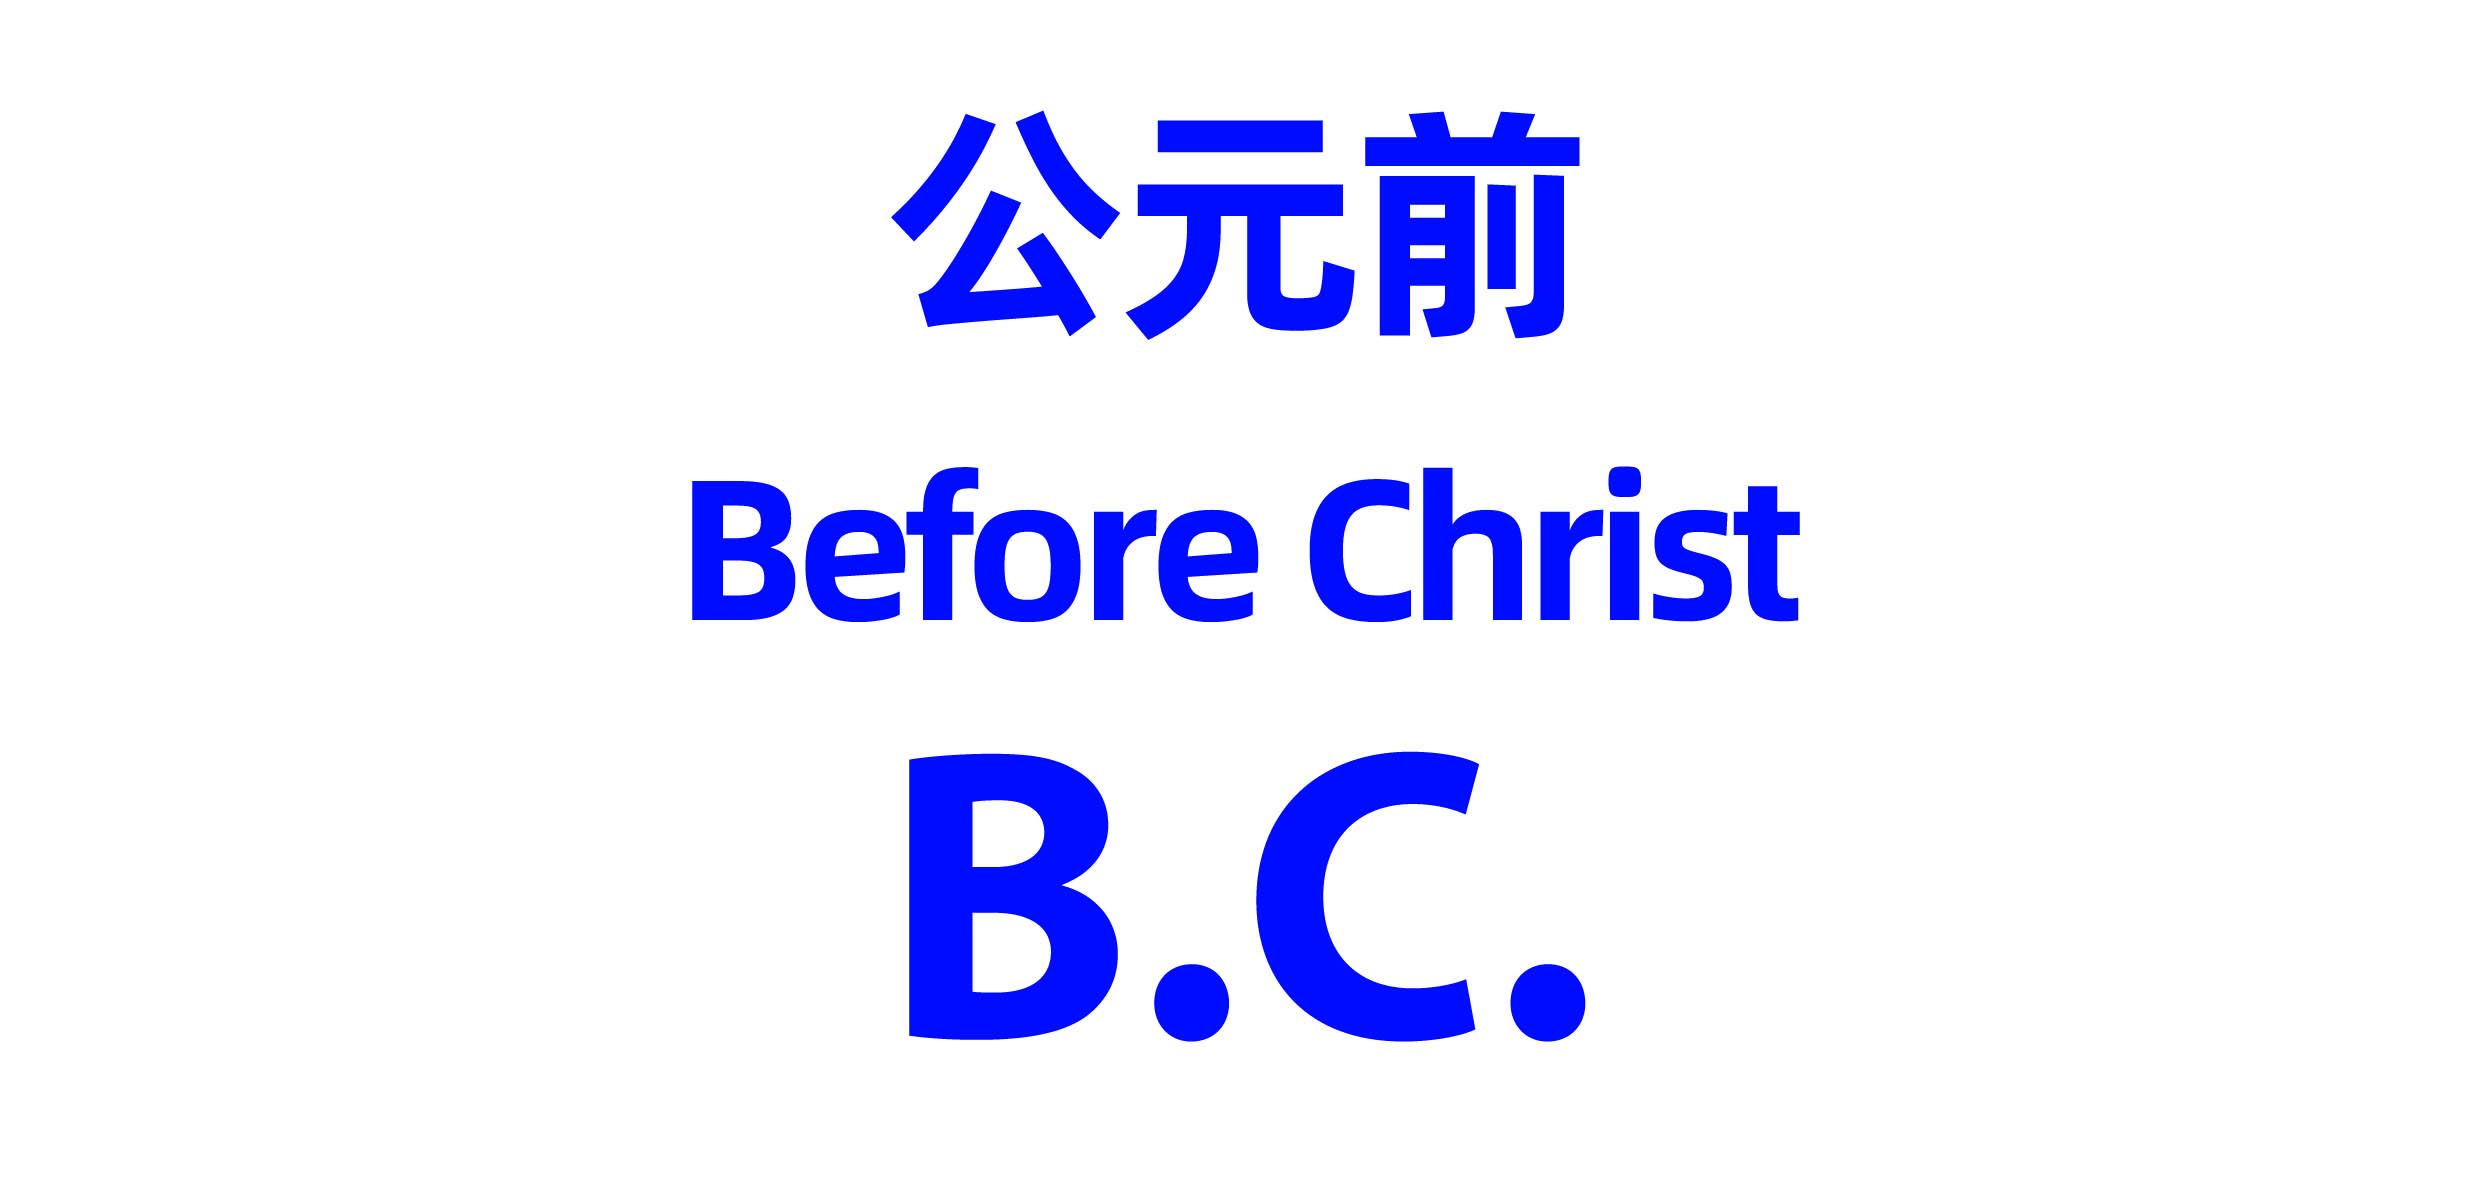 Before Christ缩写